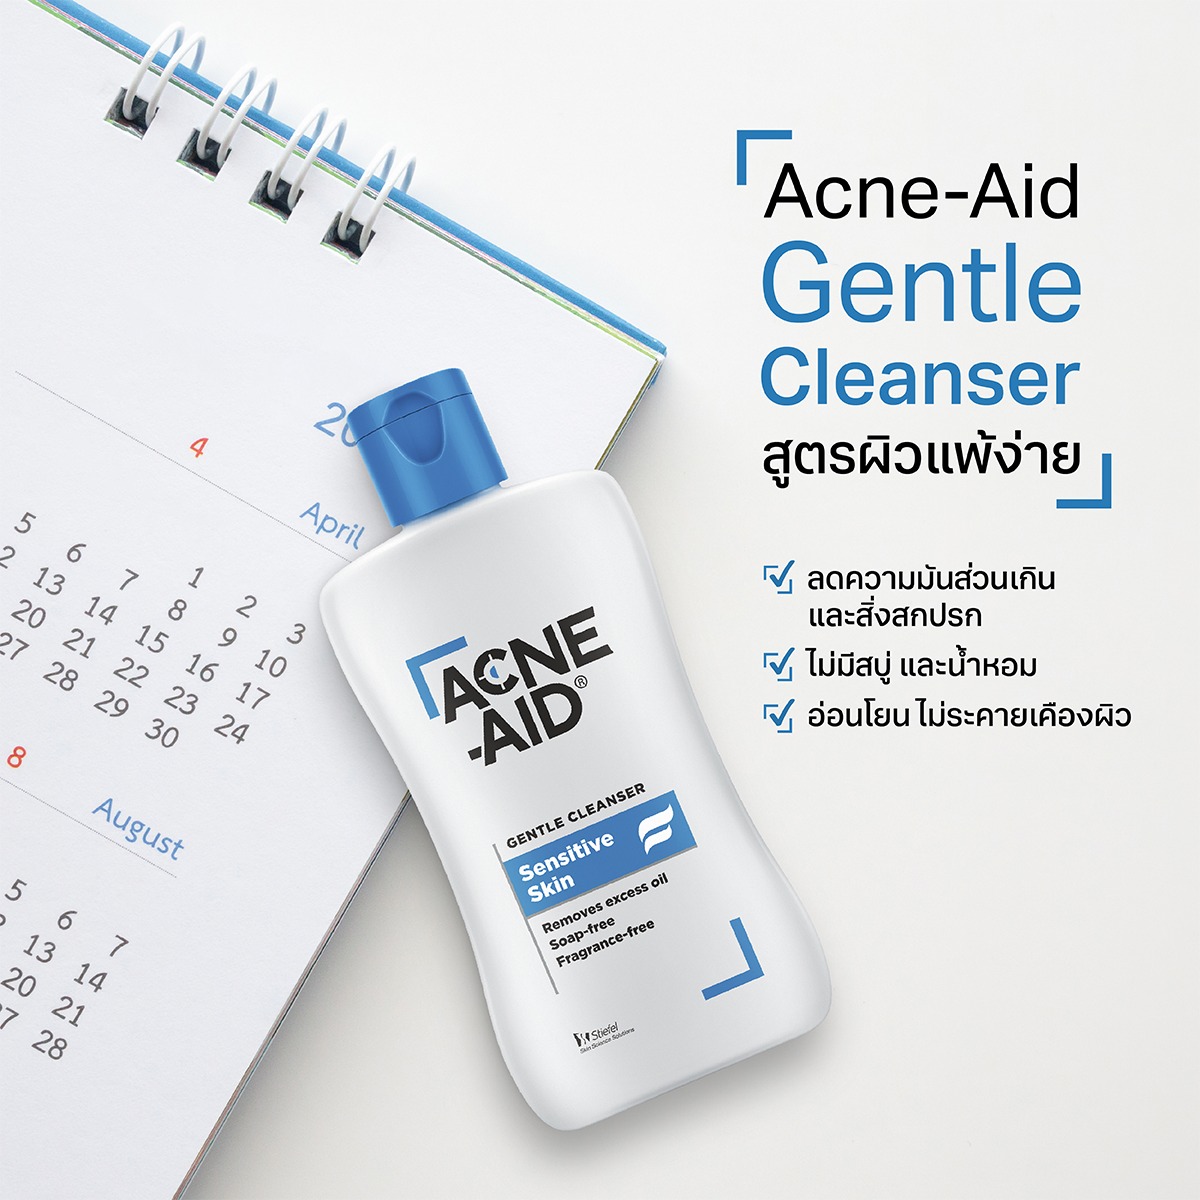 Acne-Aid Gentle Cleanser สีฟ้า ผิวบอบบางแพ้ง่าย